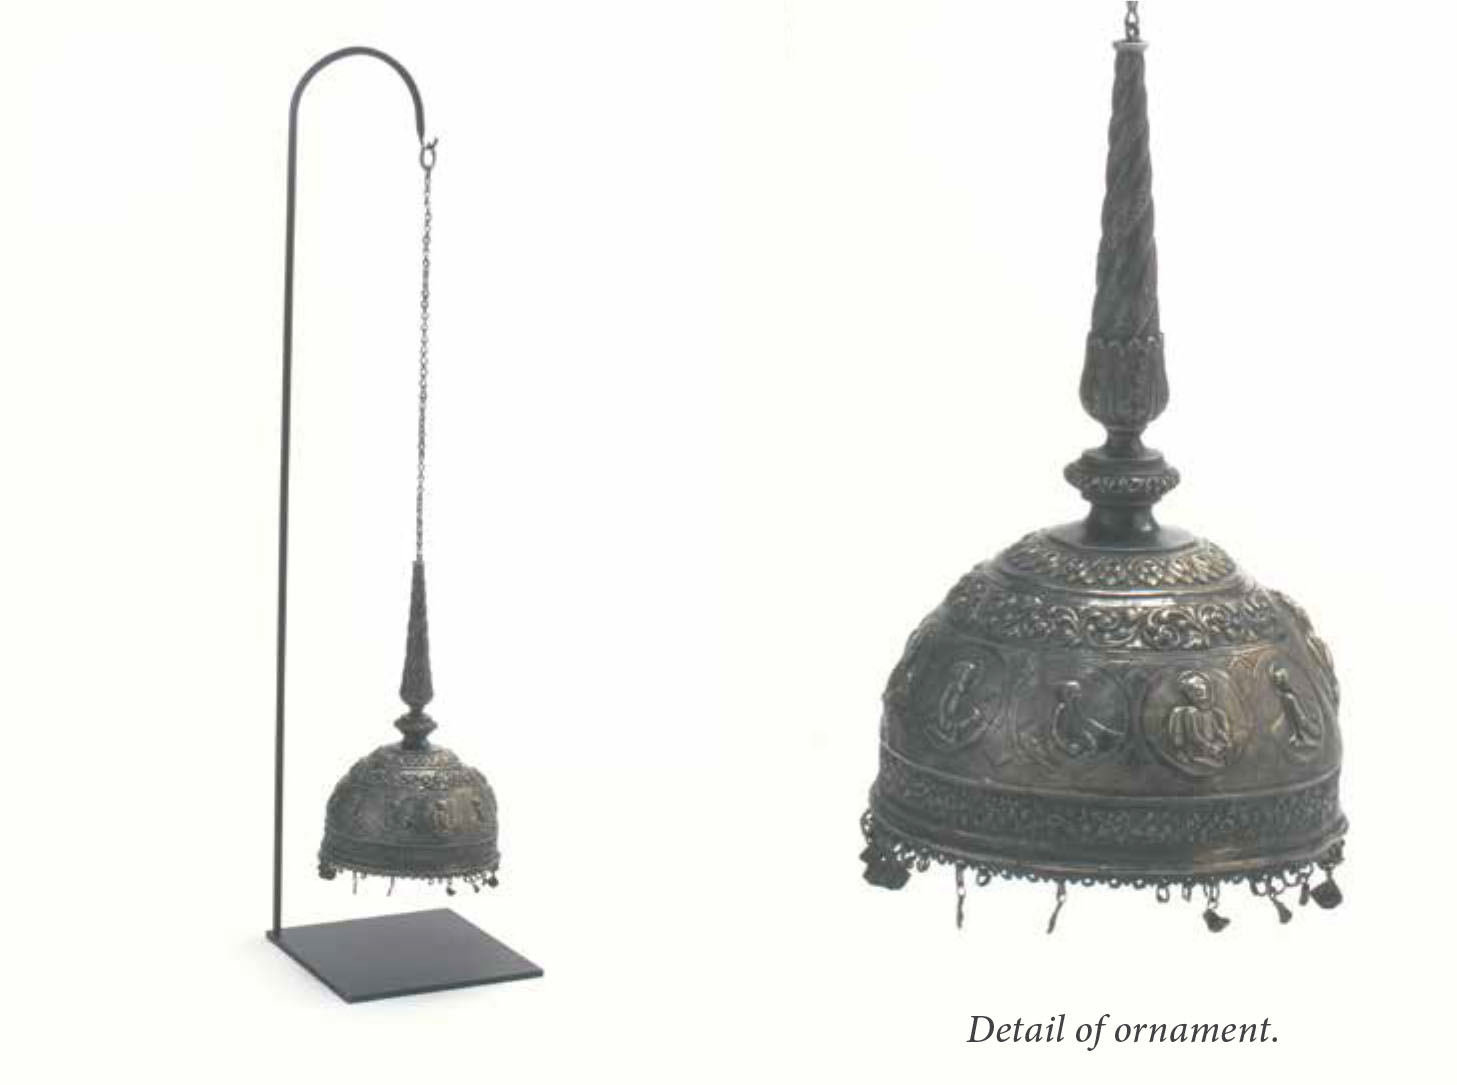 Hanging ornament, Punjab, North India, 19th century